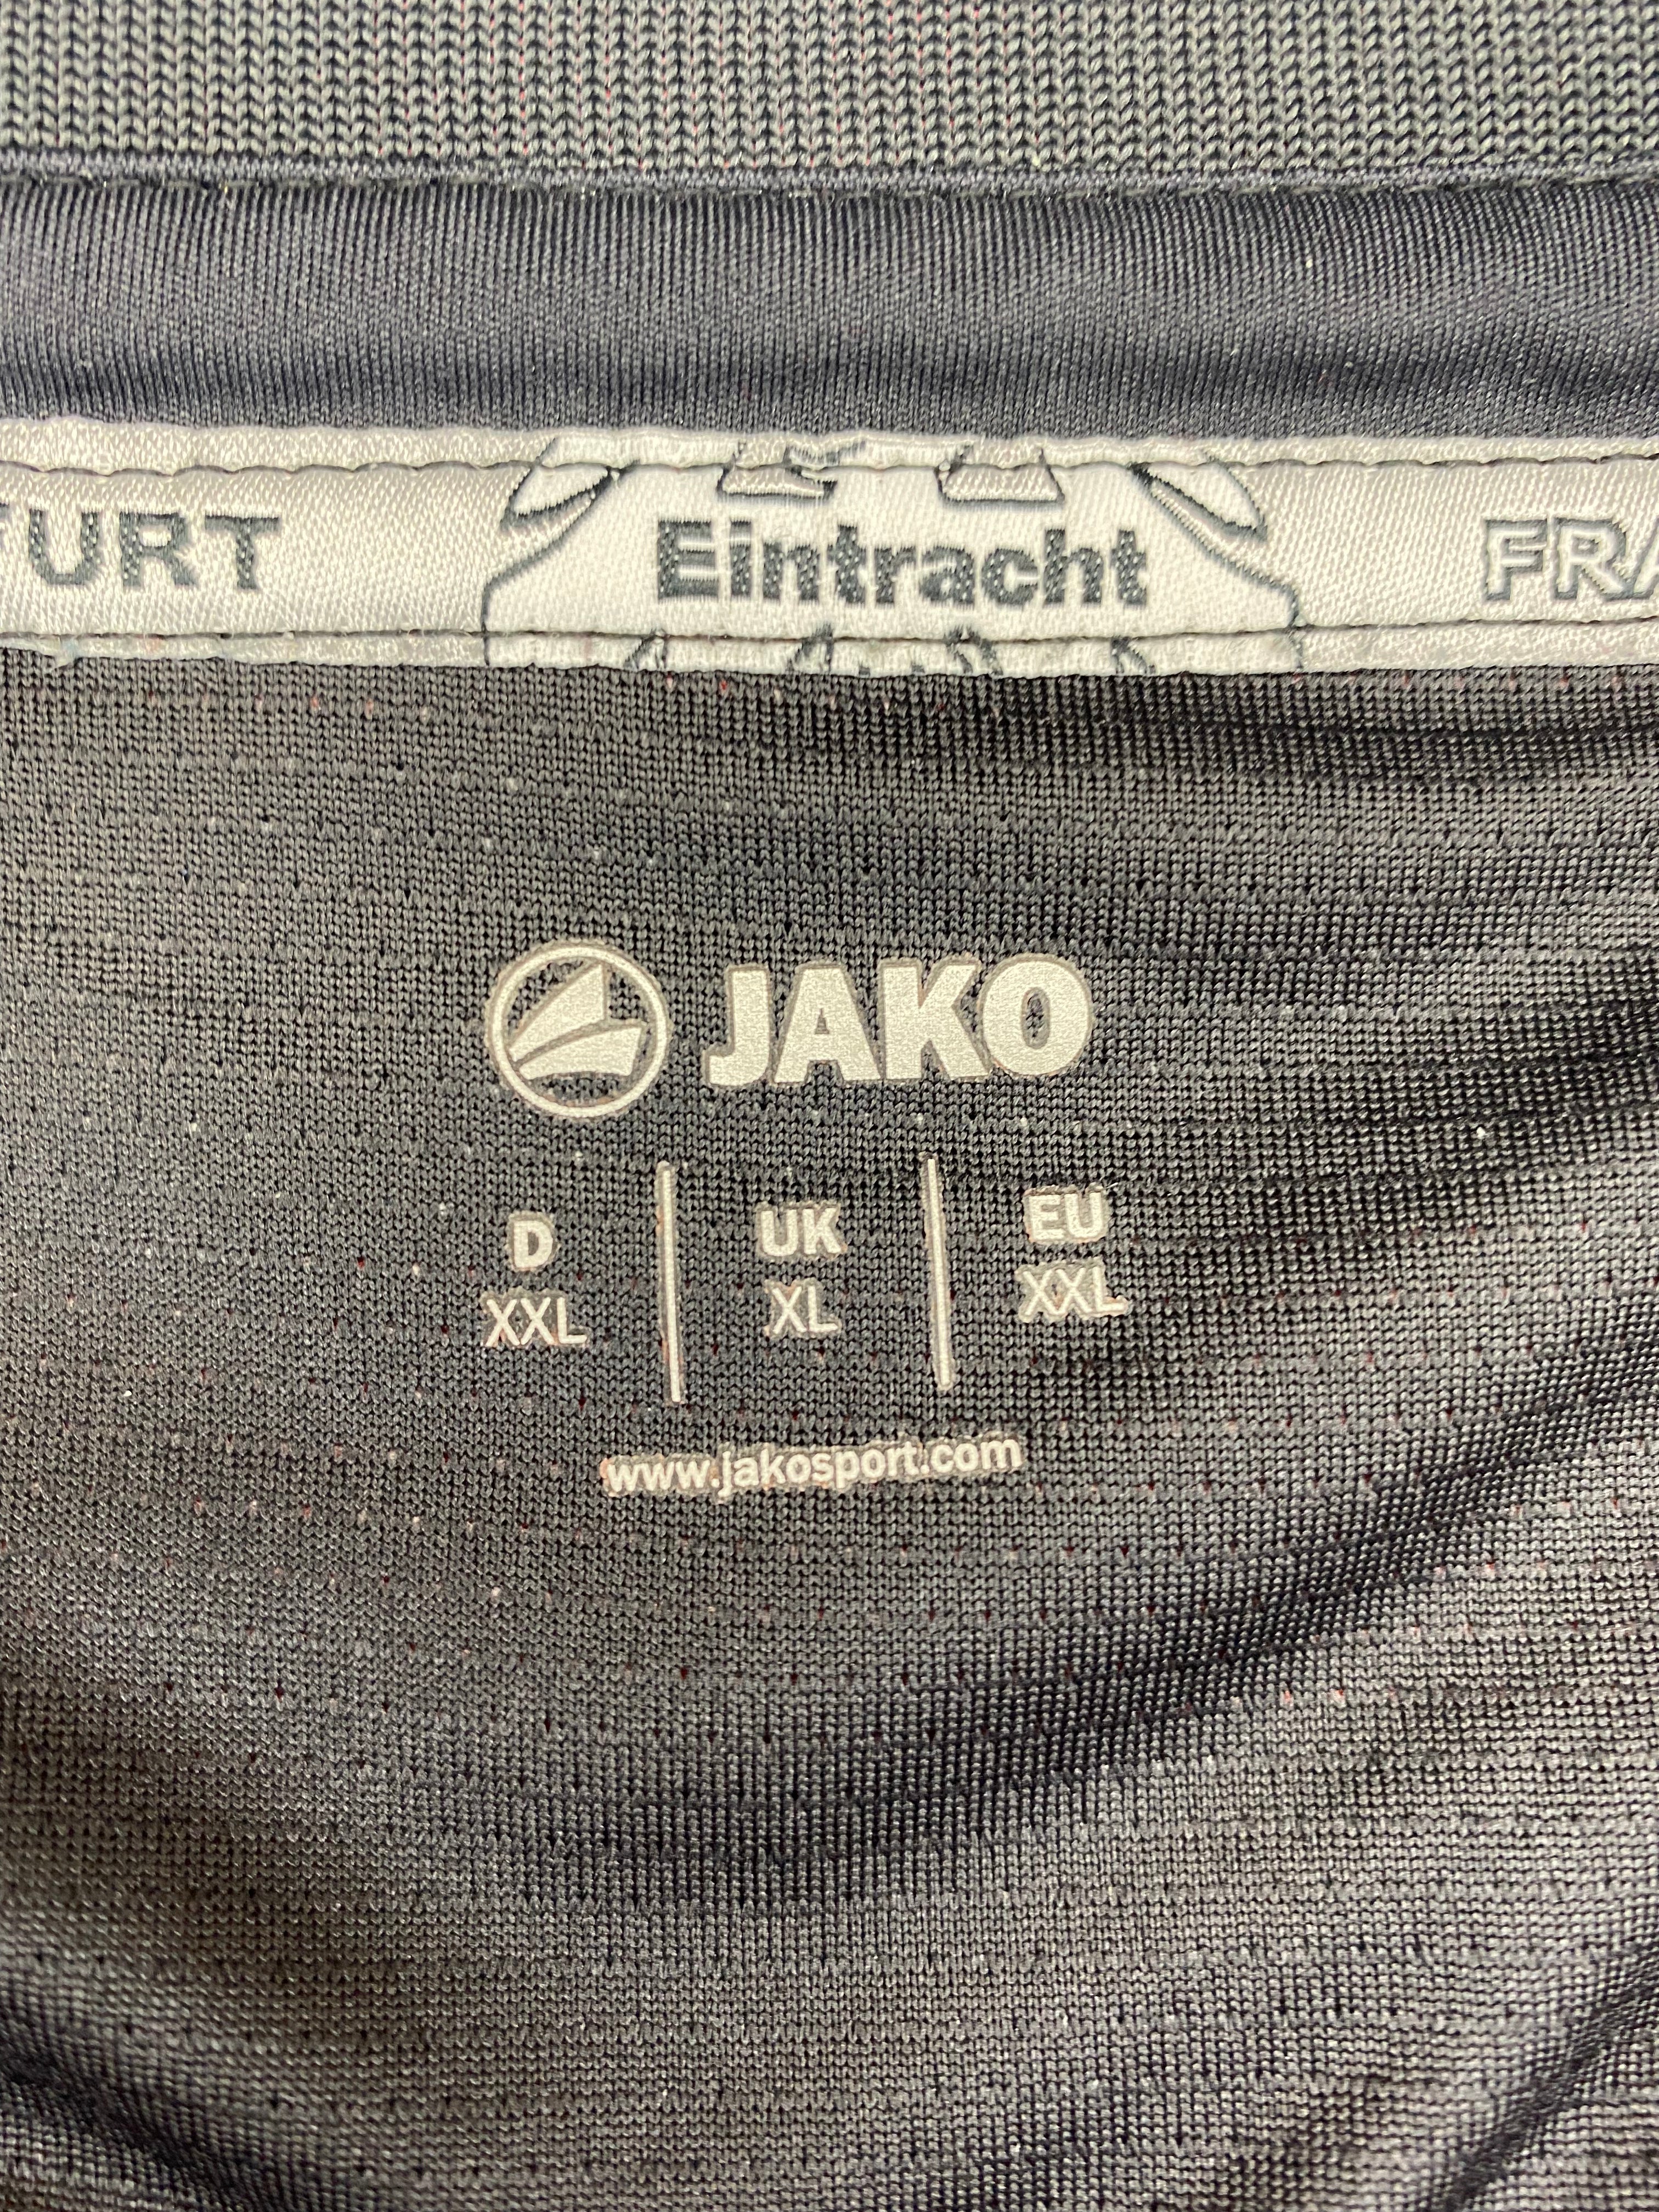 Camiseta de local del Eintracht Frankfurt 2012/13 (XL) 9/10